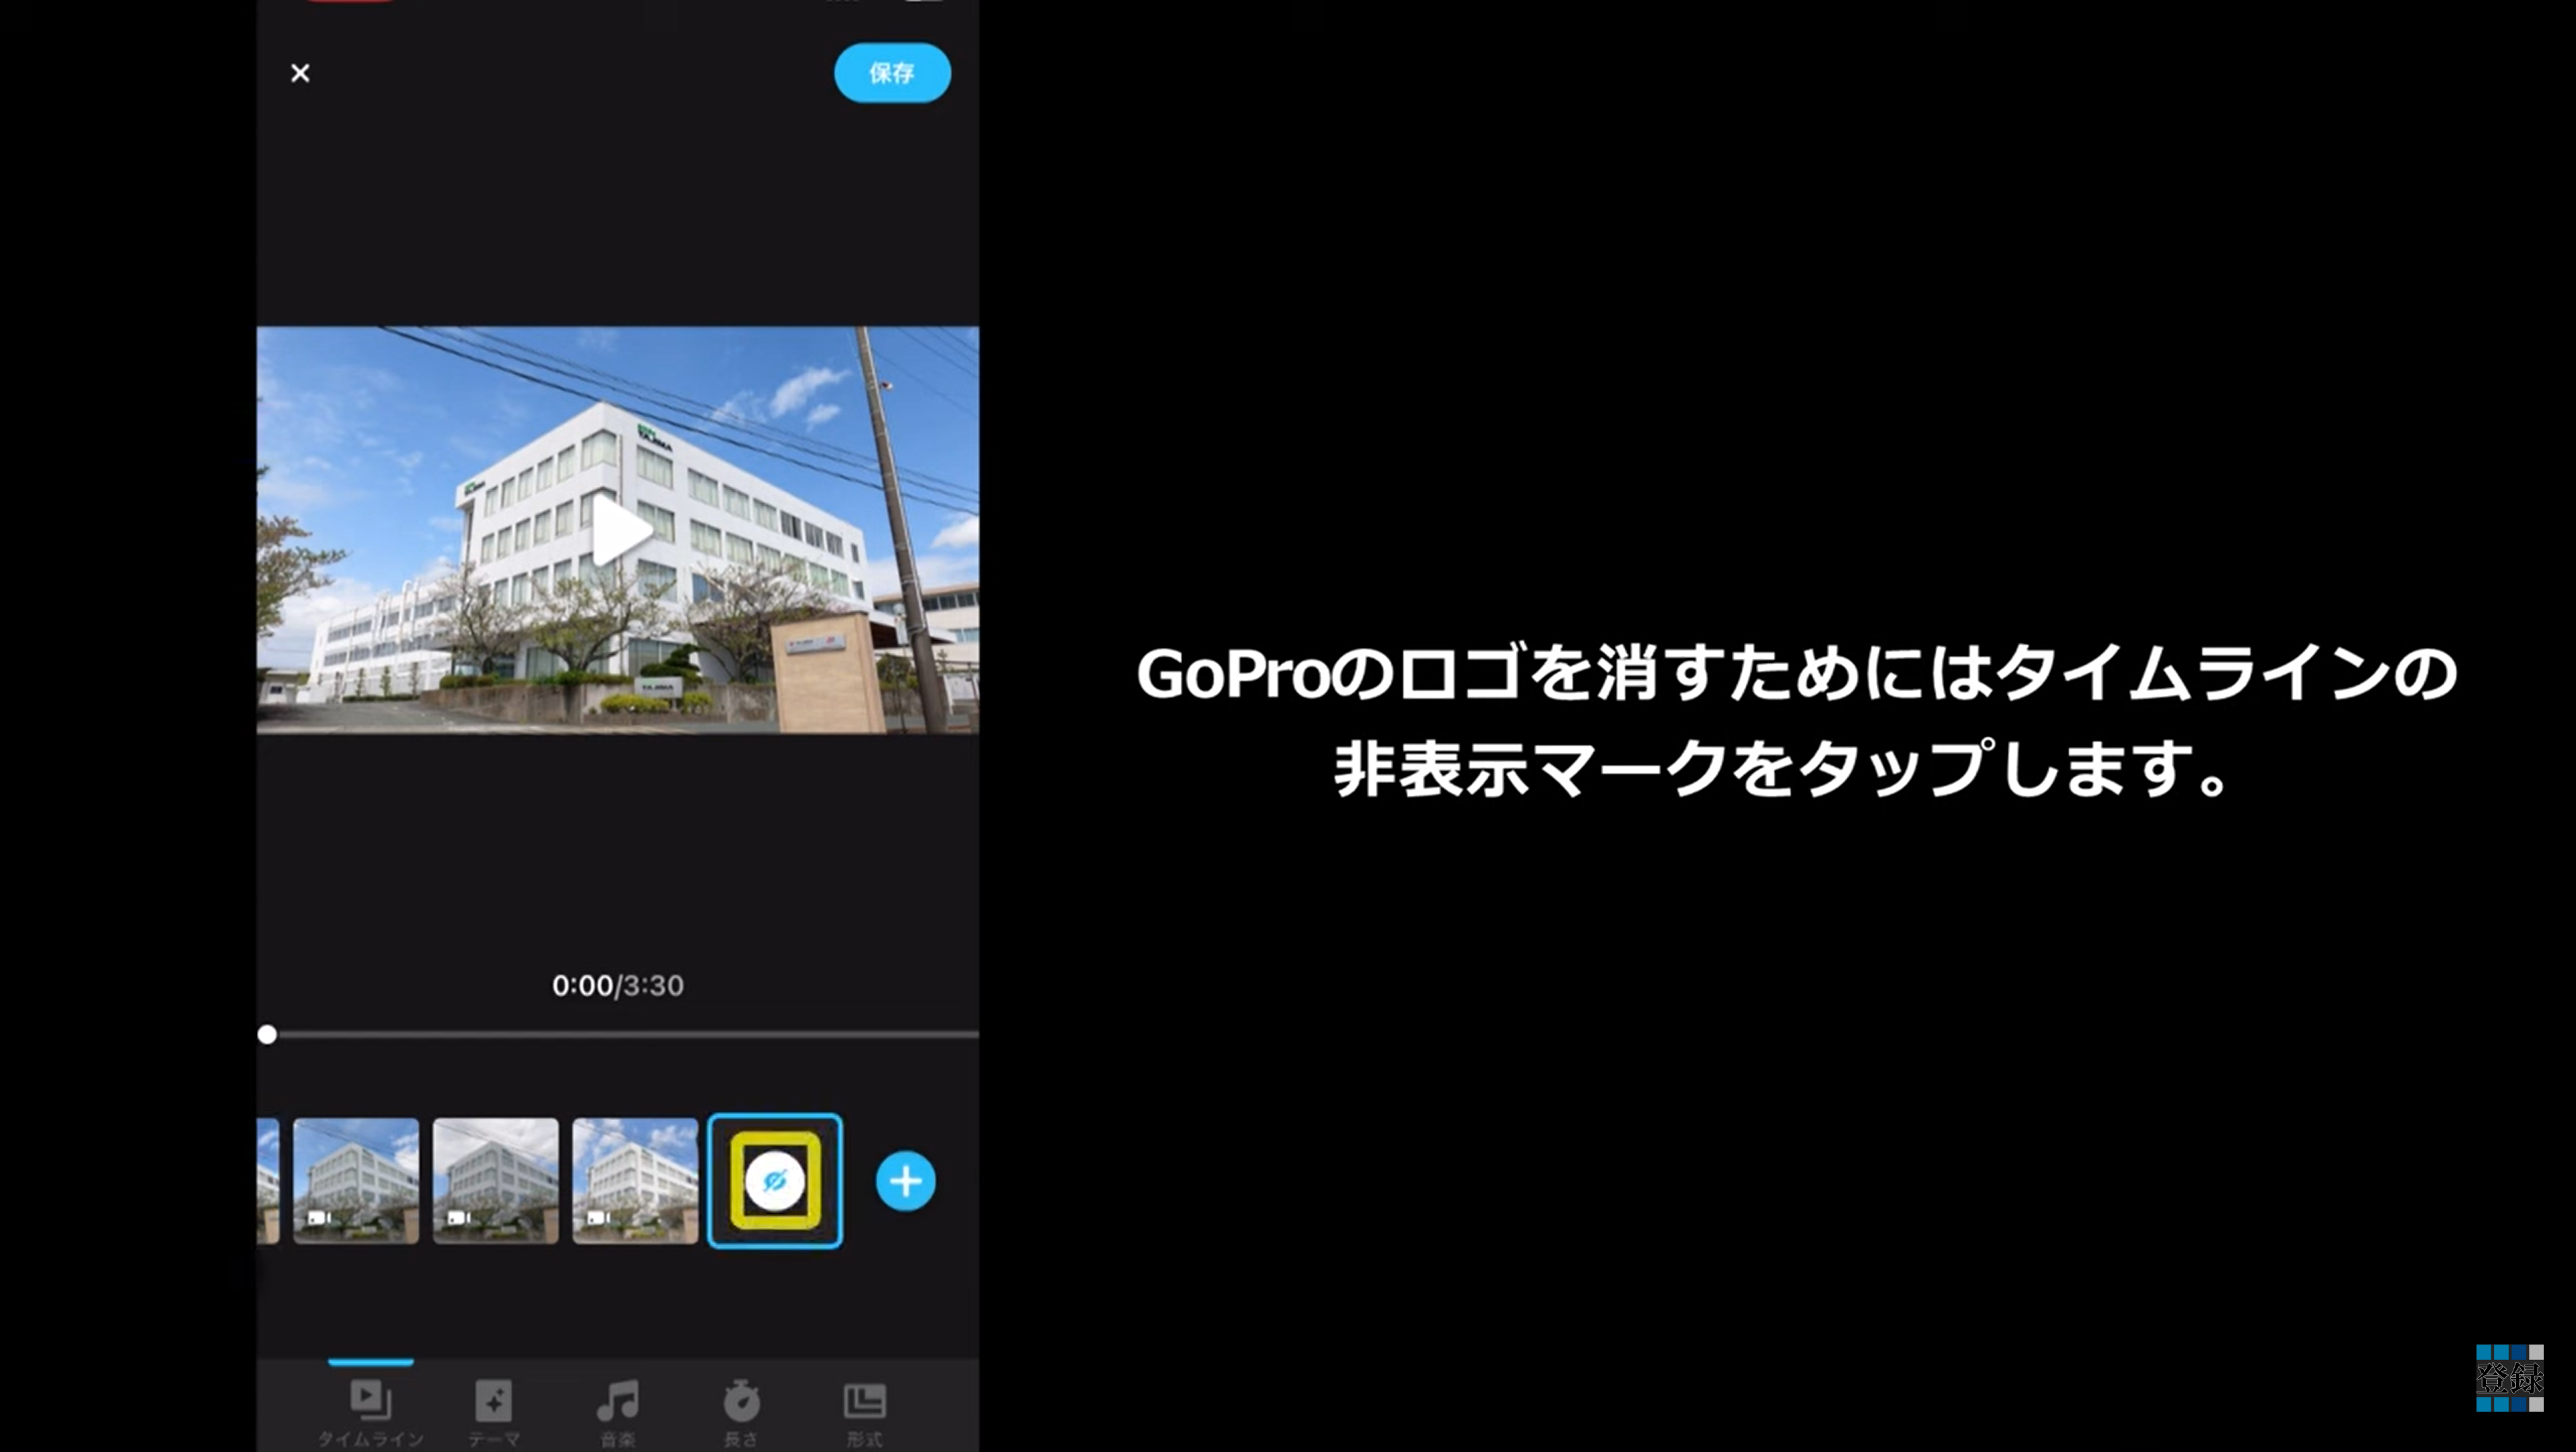 GoPro ロゴ 削除 動画